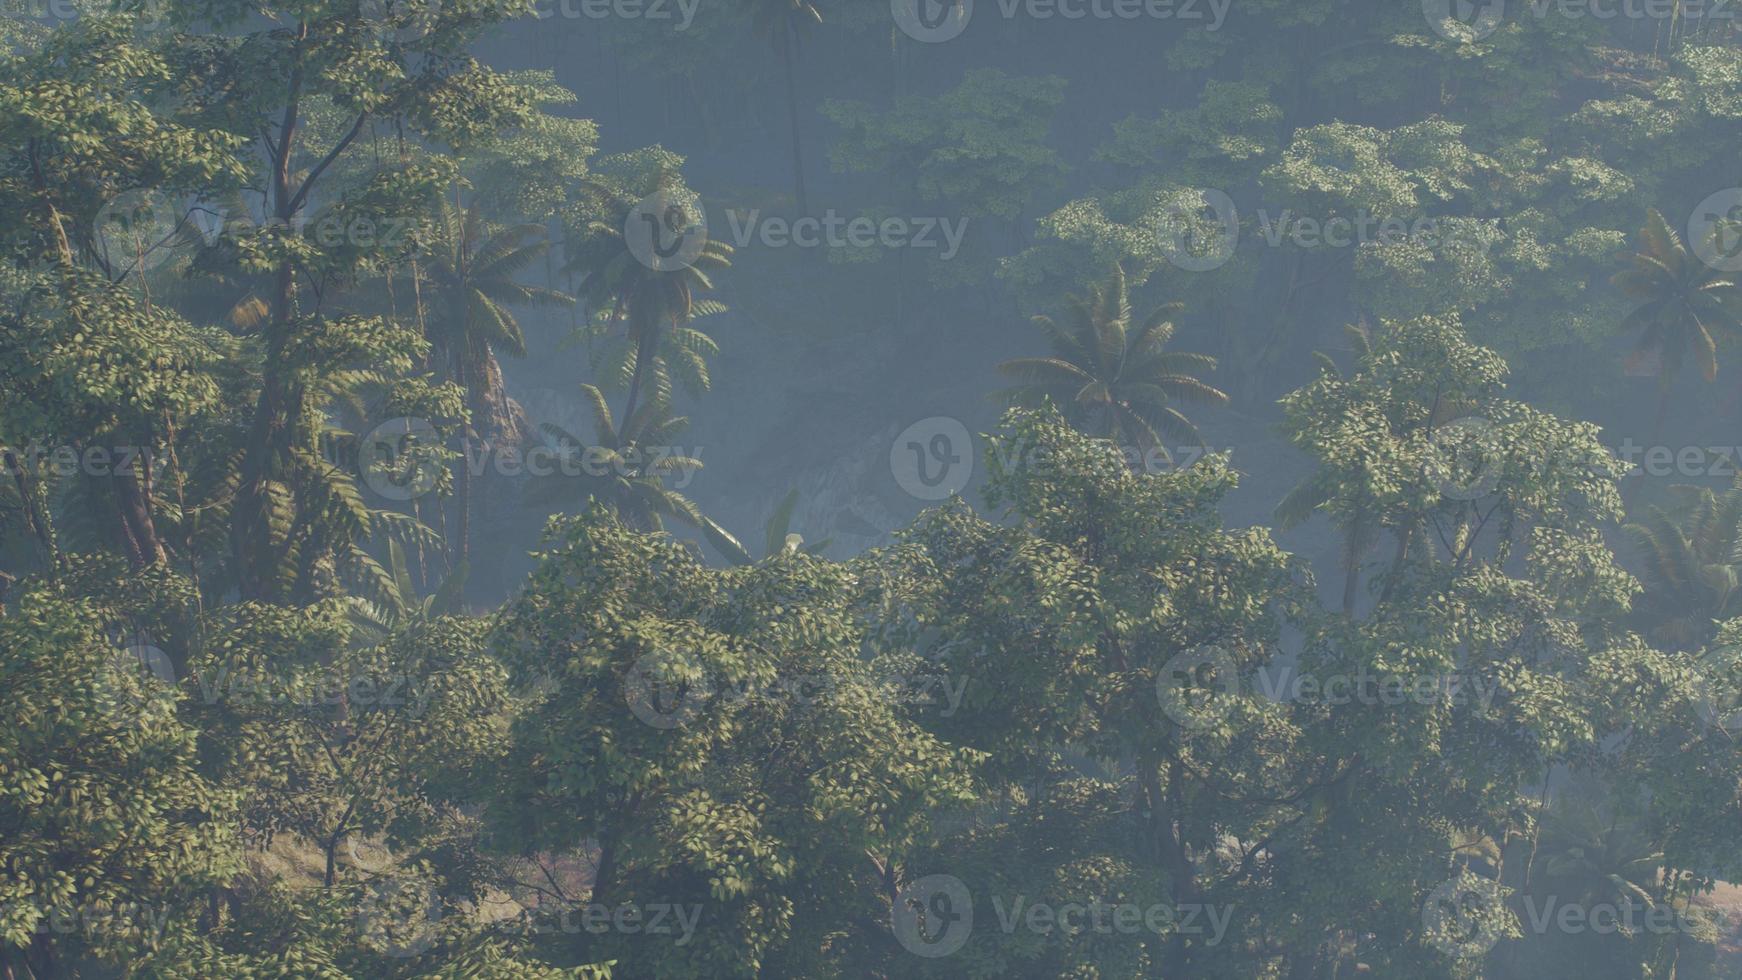 Nebel bedeckte Dschungel-Regenwaldlandschaft foto